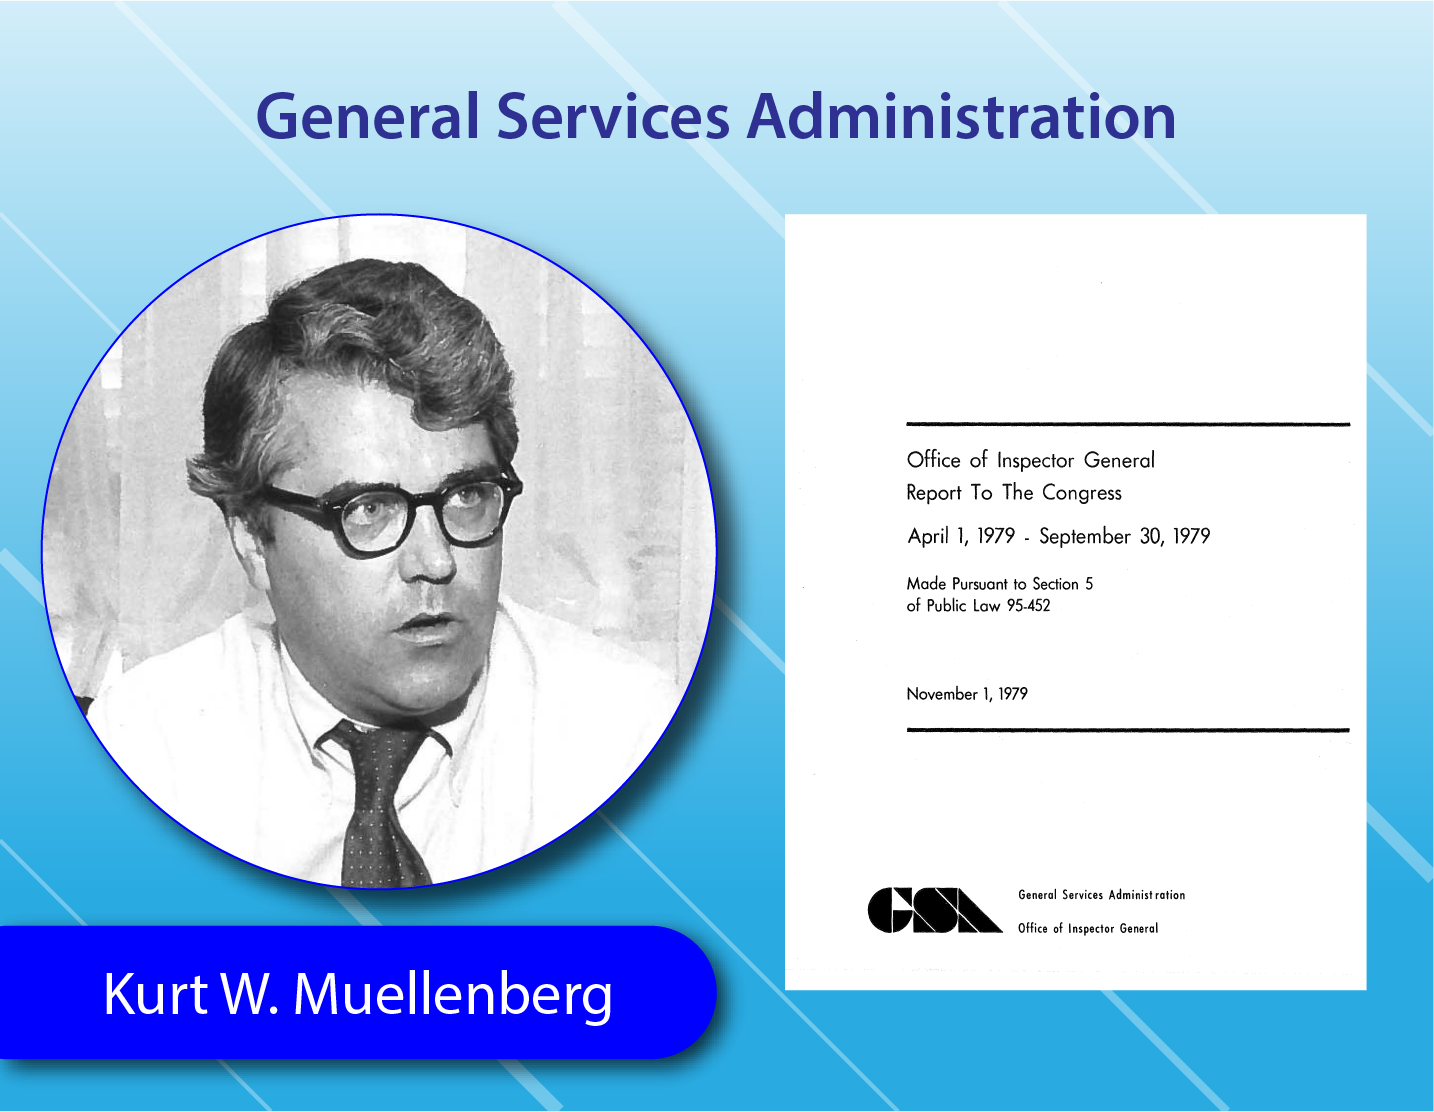 General Services Administration - Kurt W. Muellenberg